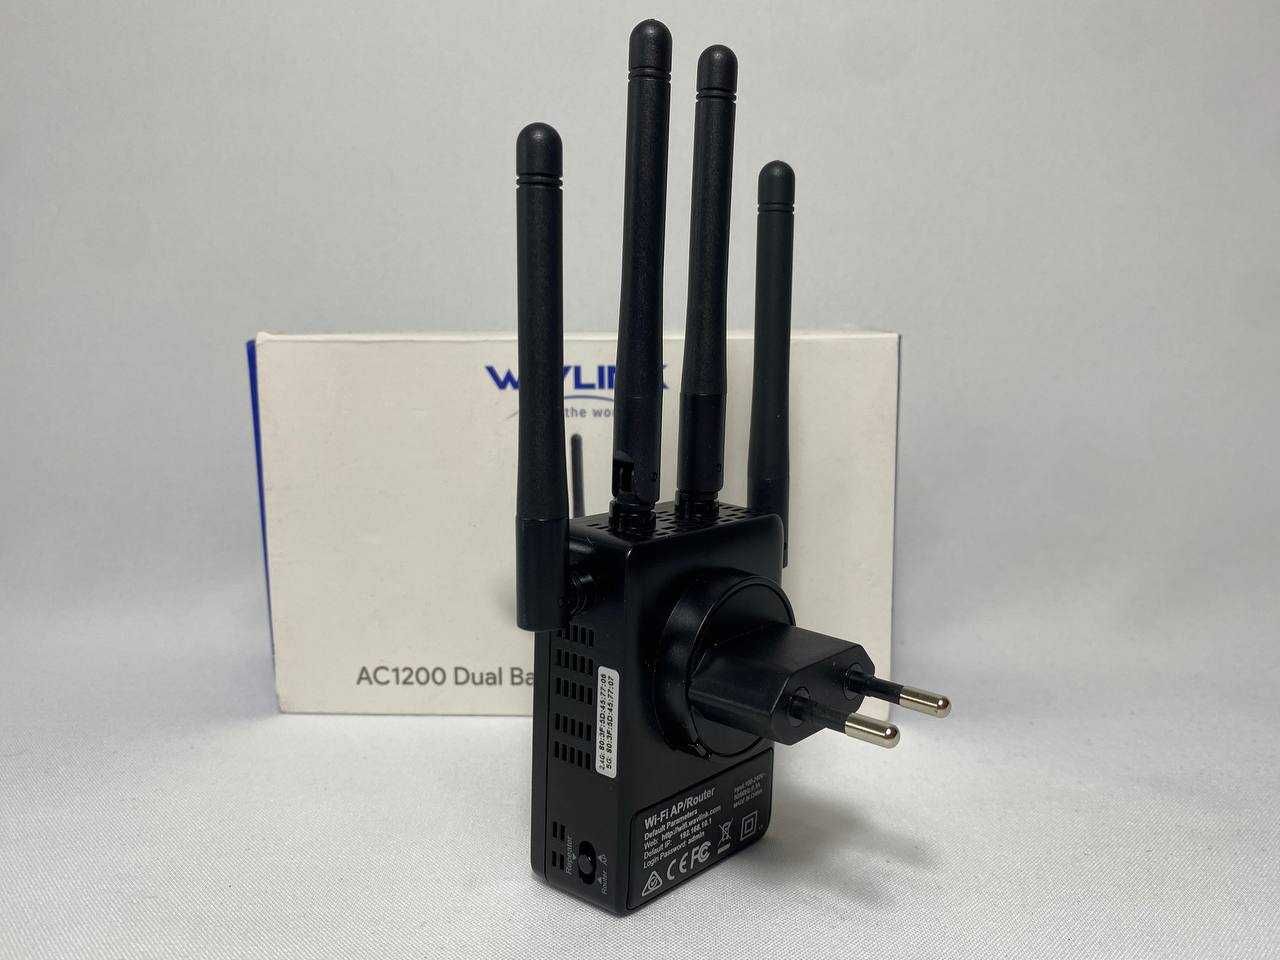 Wi-Fi репитер ретранслятор усилитель сигнала 1200 Мбит/с WAVLINK